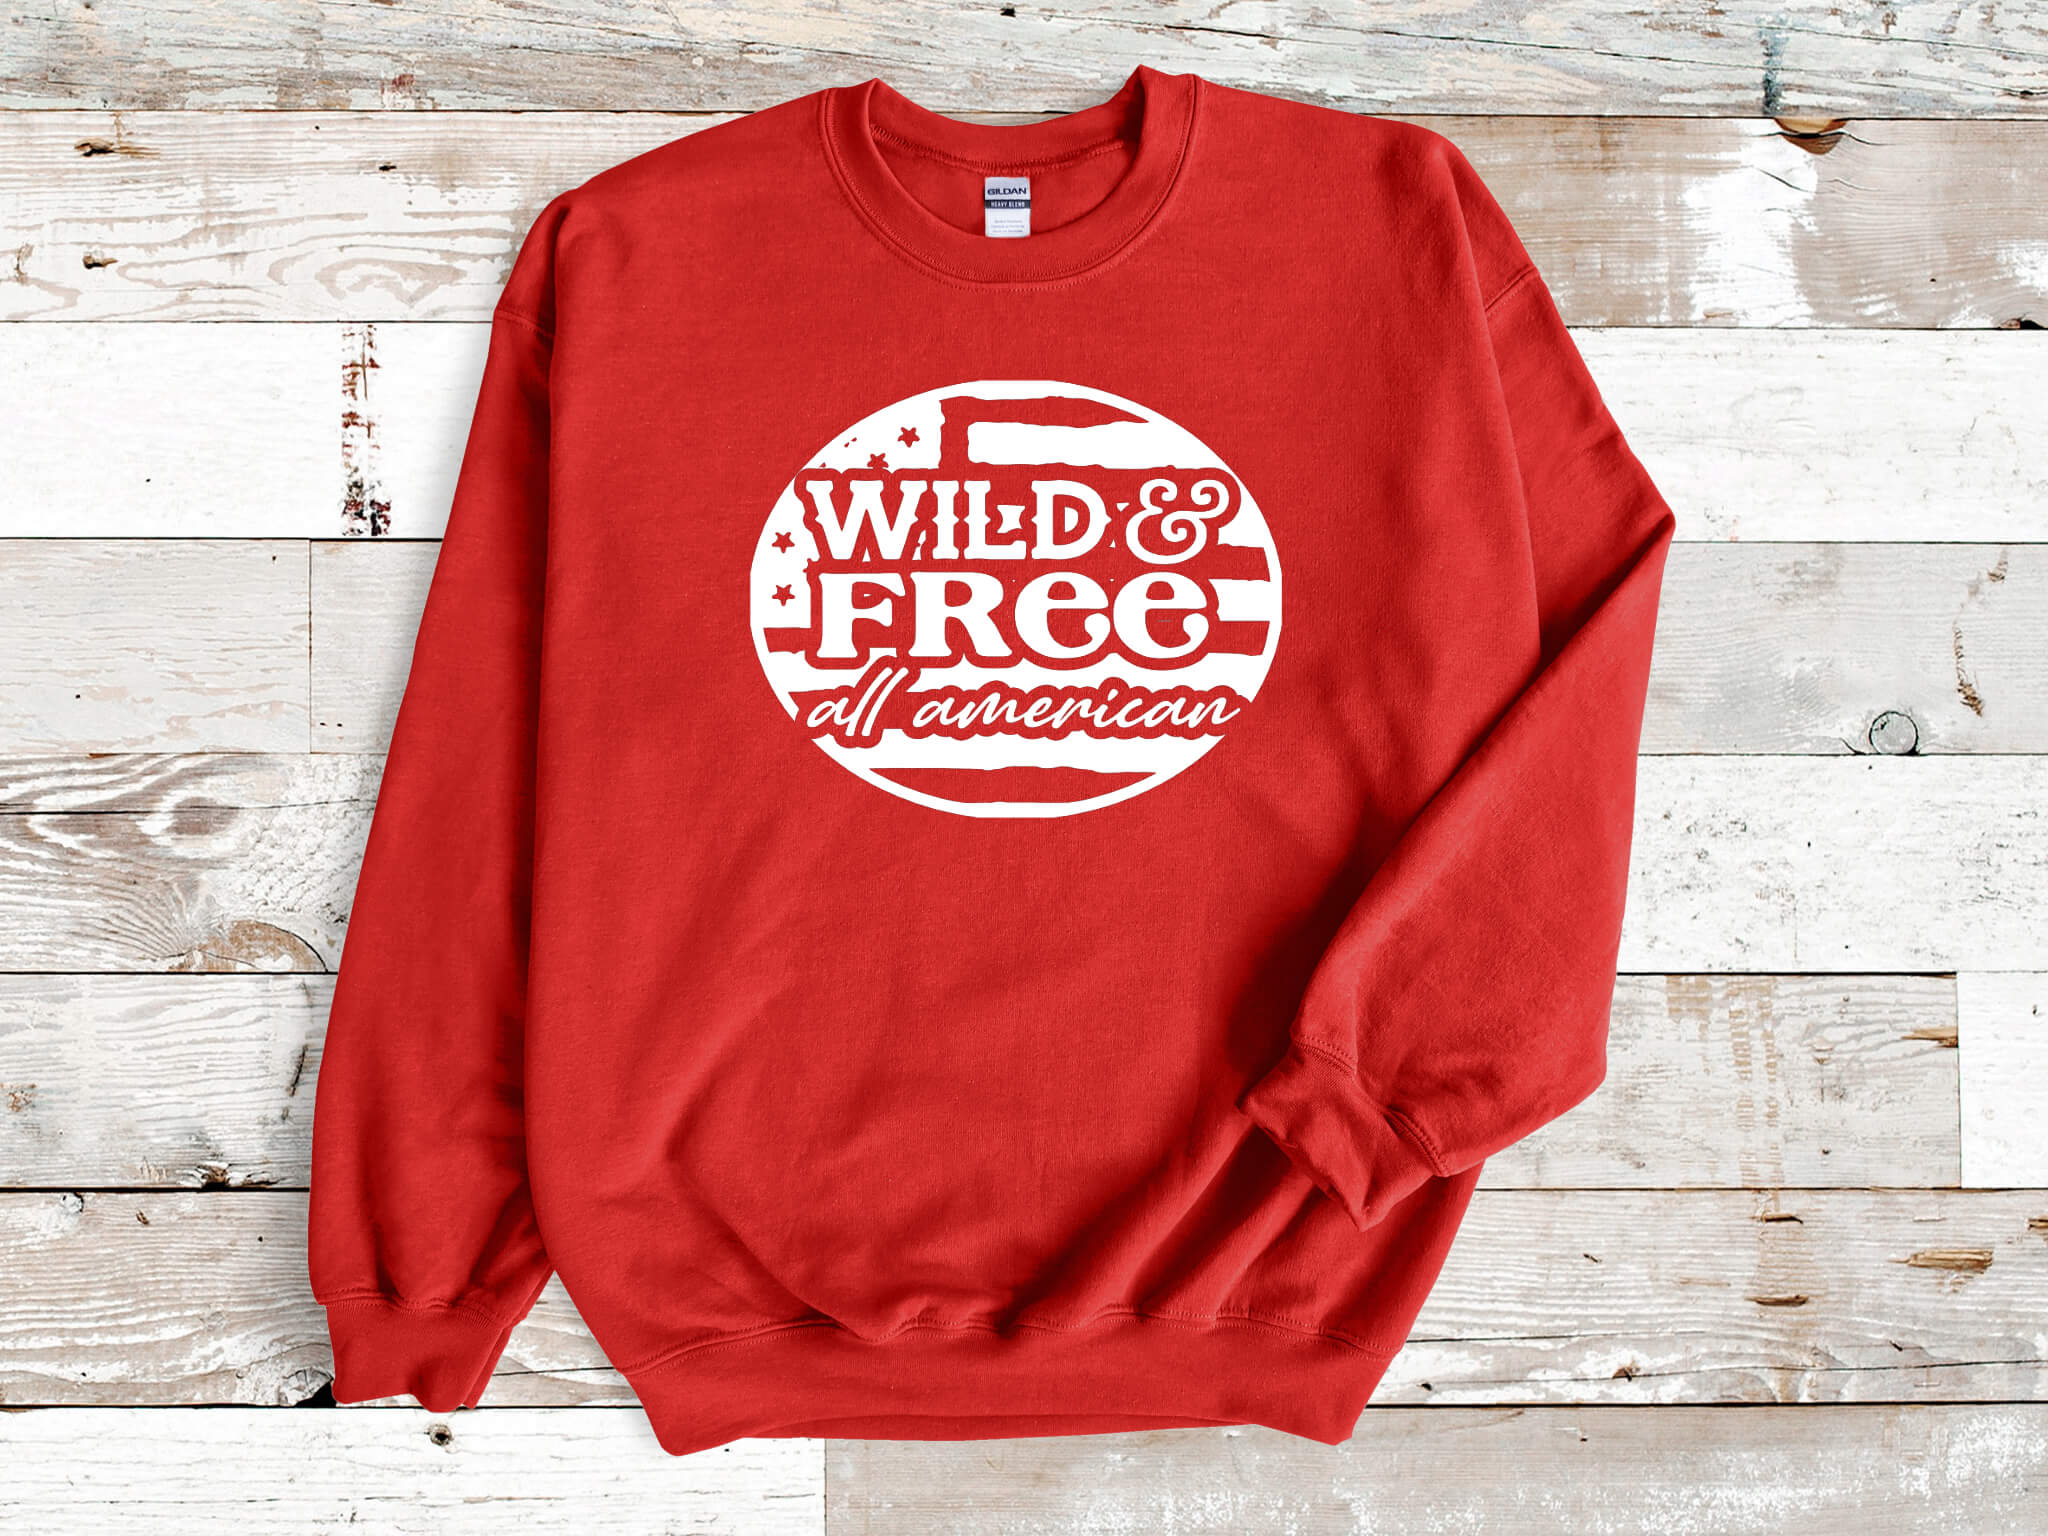 America - Wild & Free All American Unisex Graphic Print T-Shirt / Sweatshirt